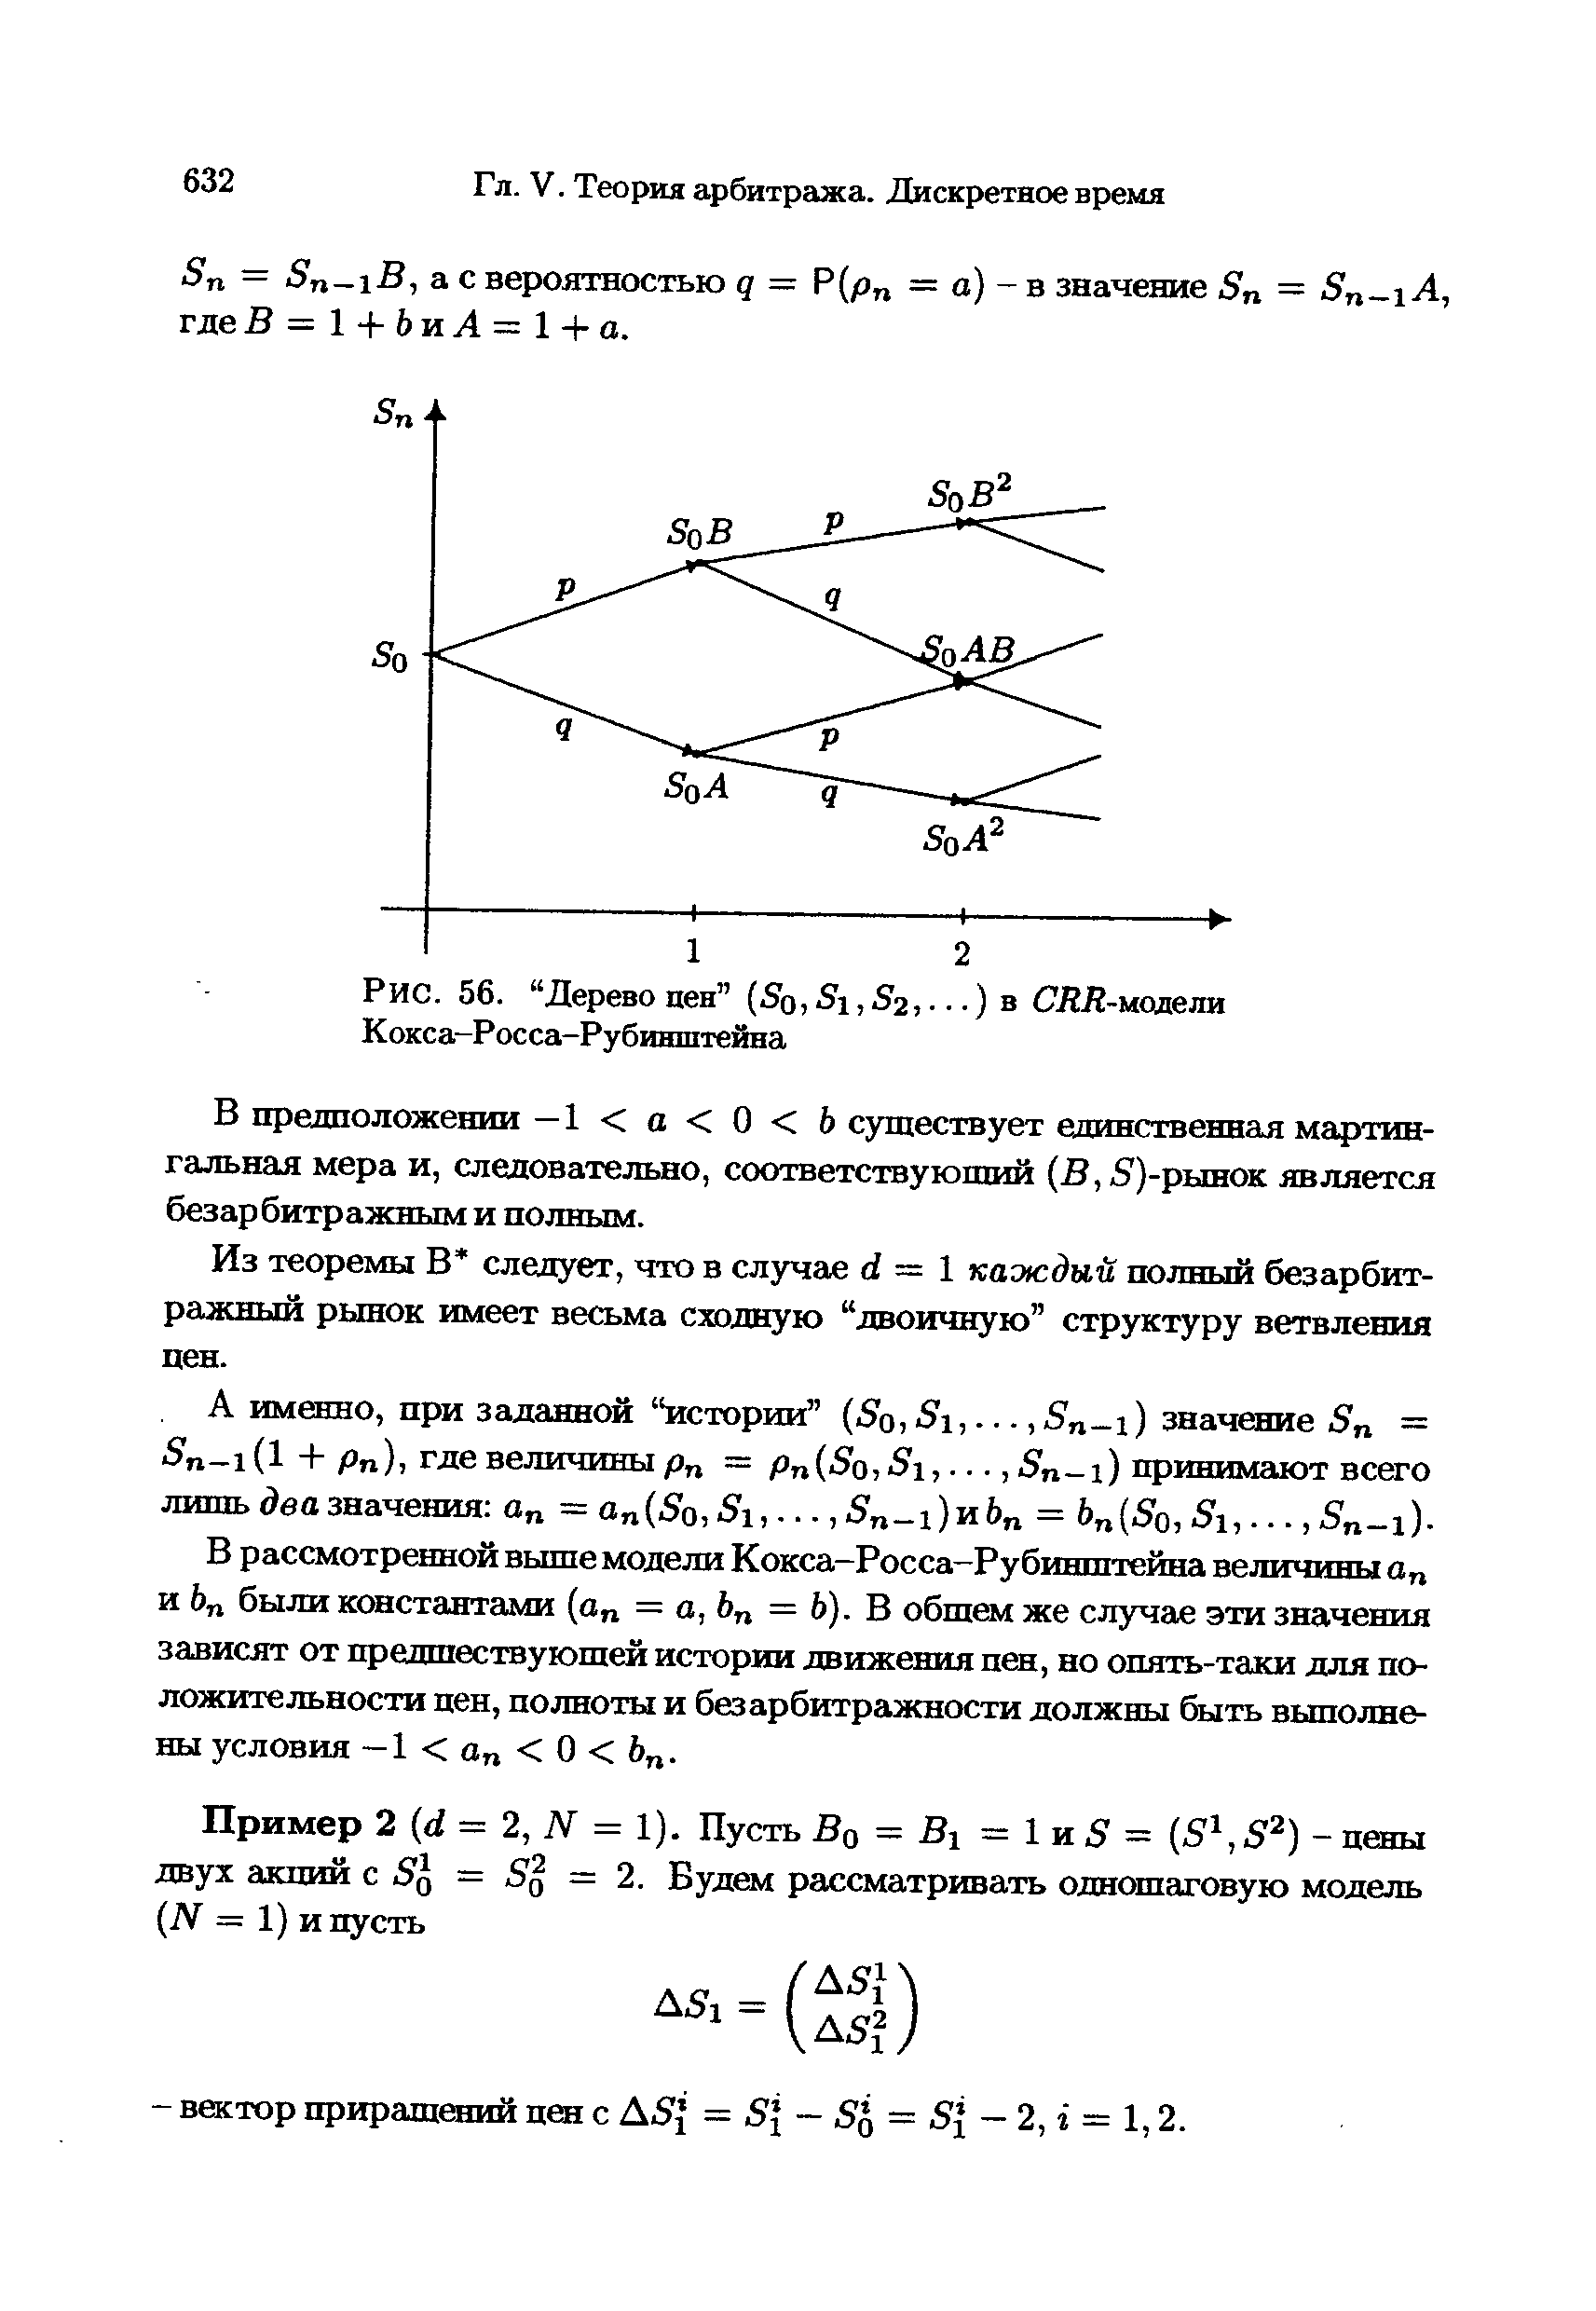 Рис. 56. "Дерево пен" (50, Si, 52,. . . ) в СЯД-модели Кокса-Росса-Рубинштейна
